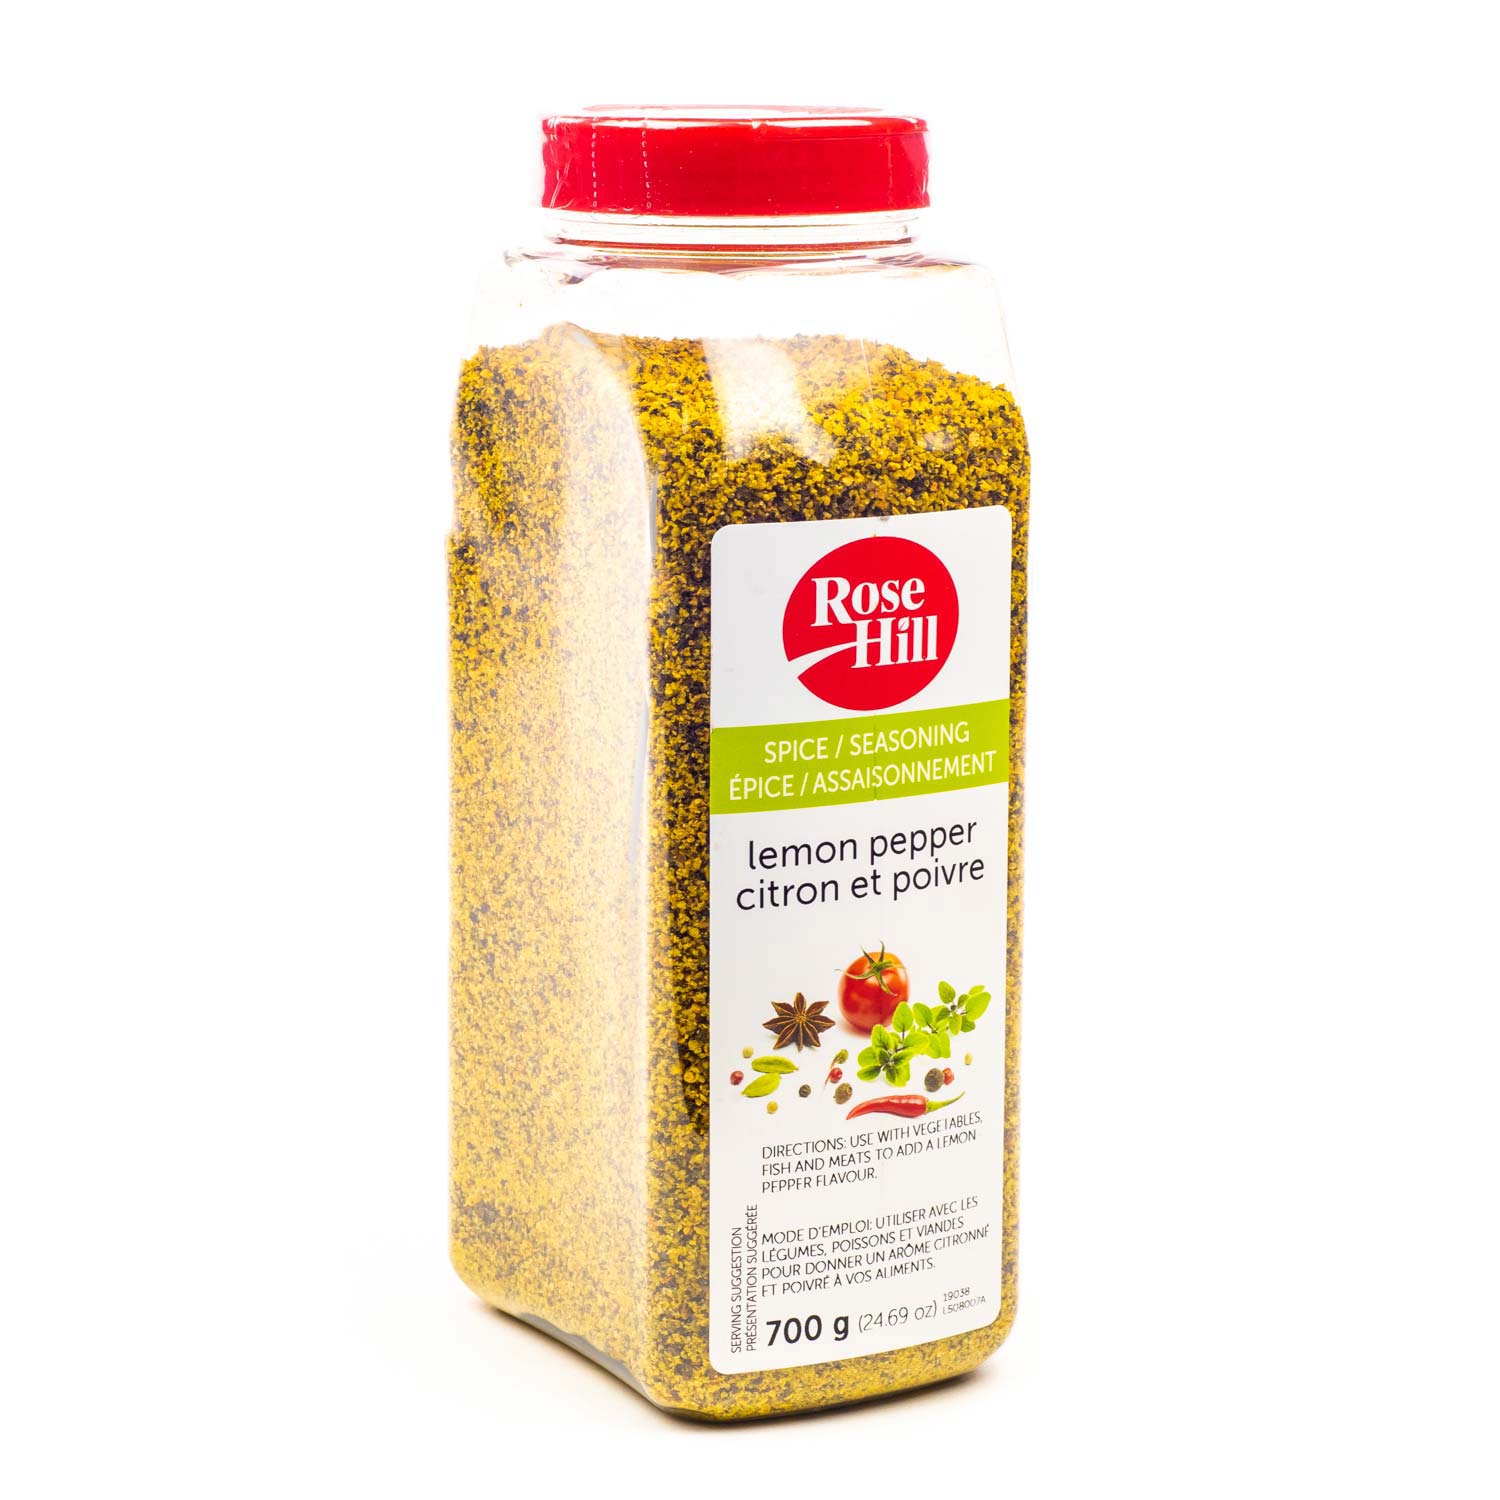 Apollo Herbes & épices Poivre citronné - Bidon 600 grammes